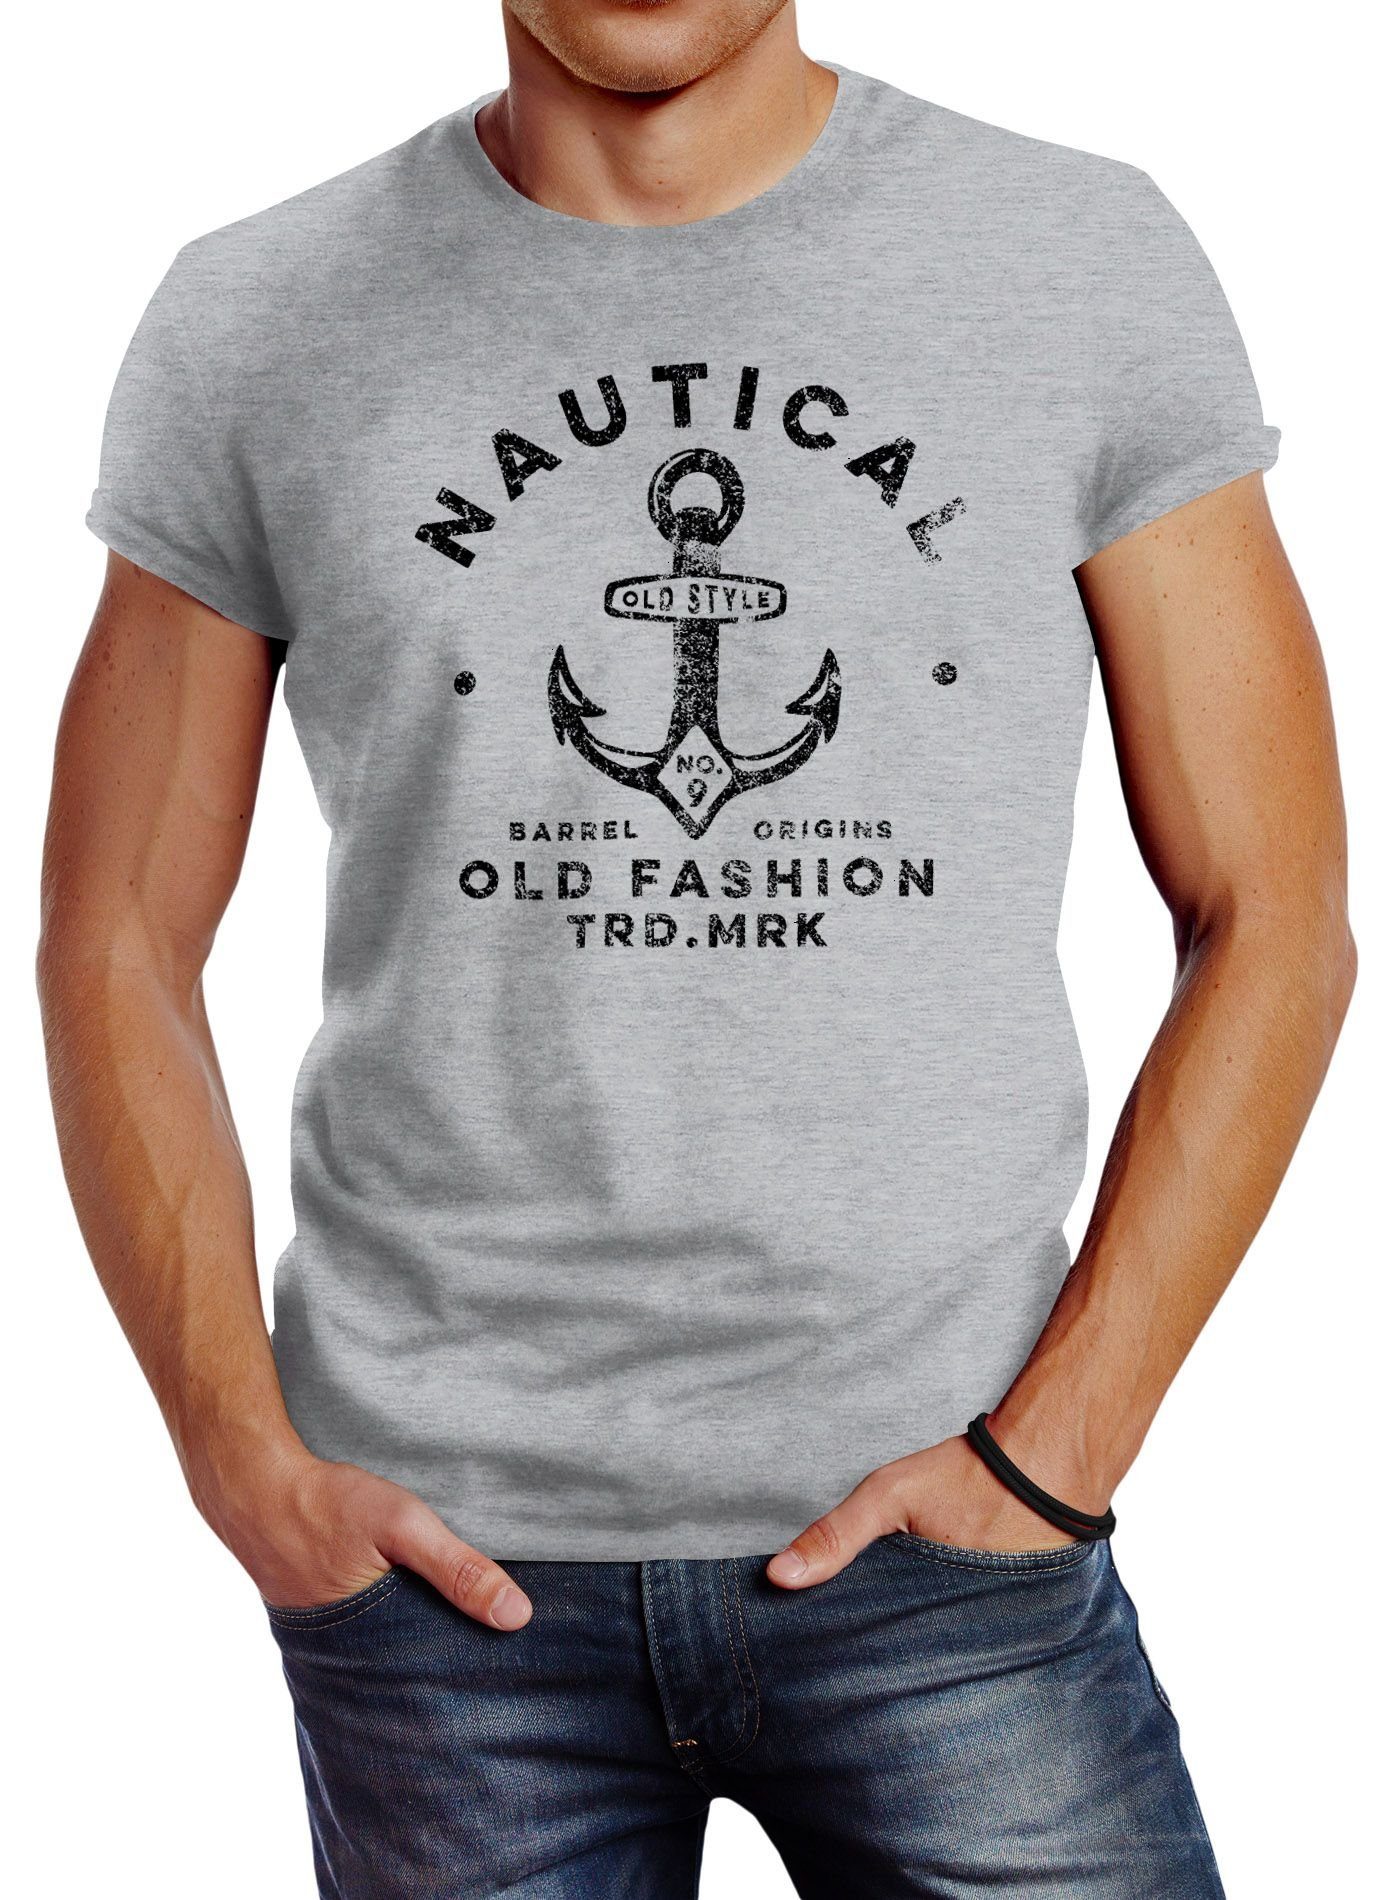 Neverless Print-Shirt Neverless® Herren T-Shirt Anker Motiv Schriftzug Nautical Old Fashion Retro Design Fashion Streetstyle mit Print grau